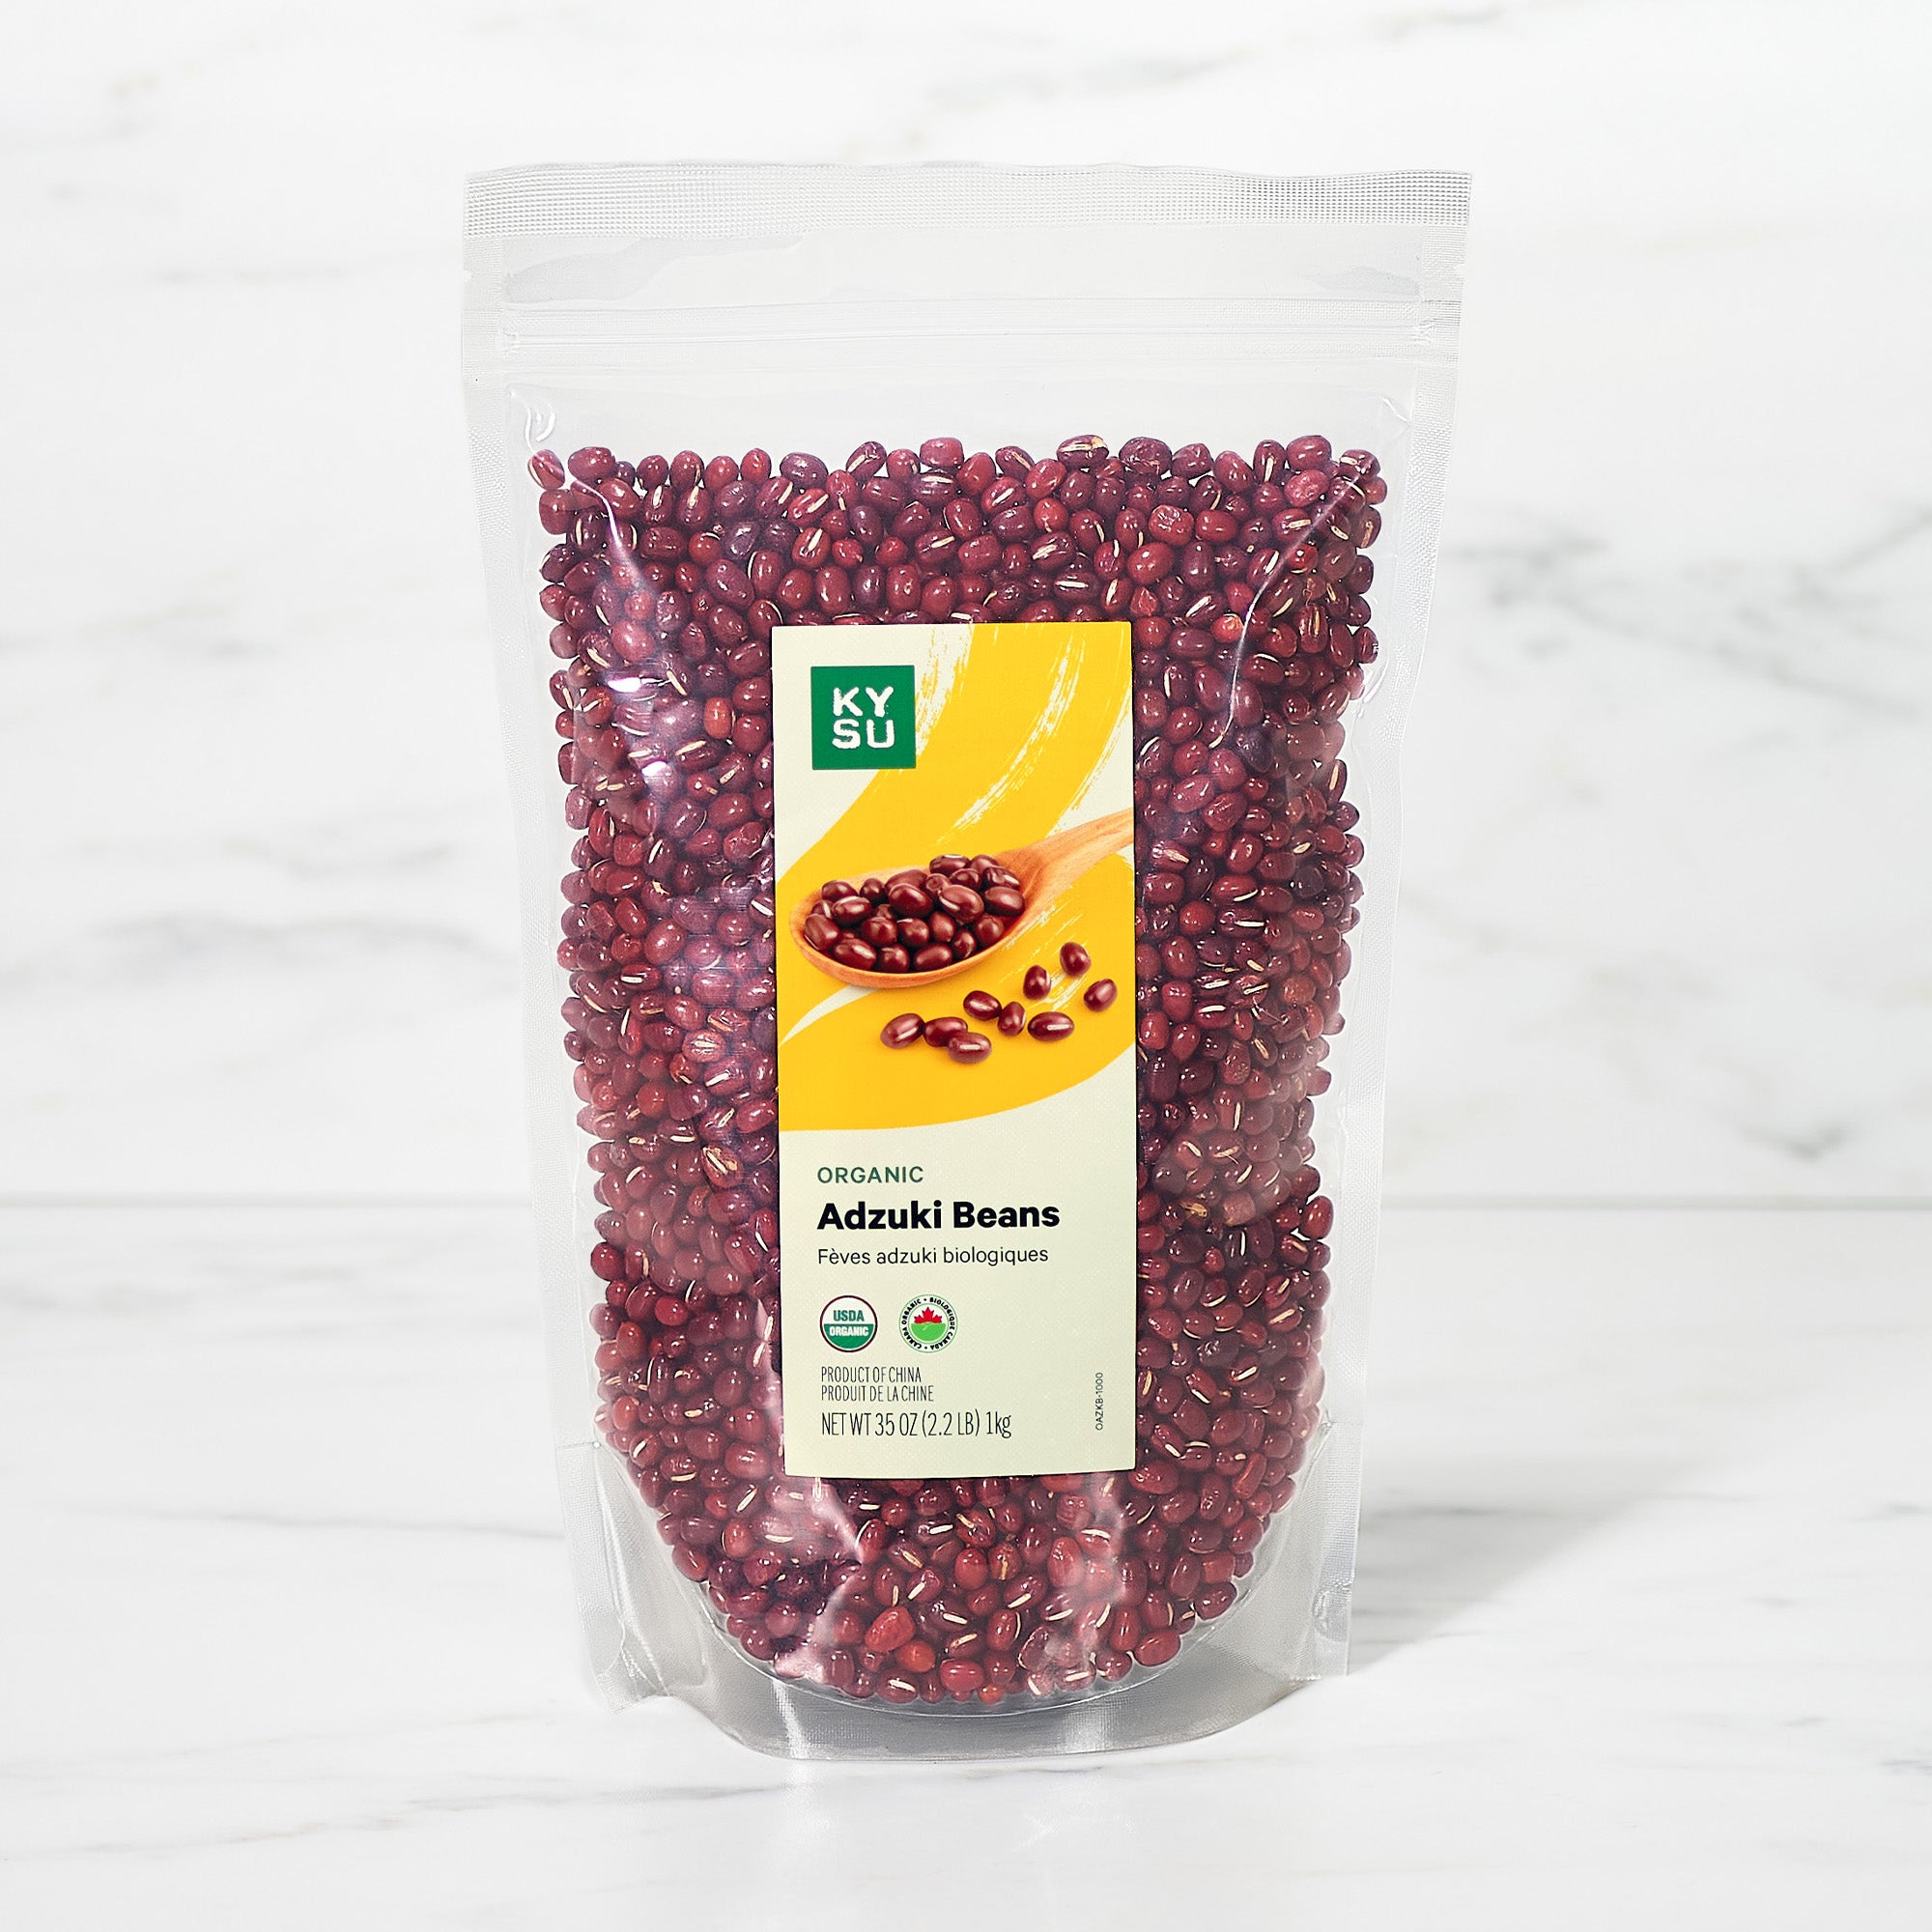 Organic Adzuki beans, 2.2 lb